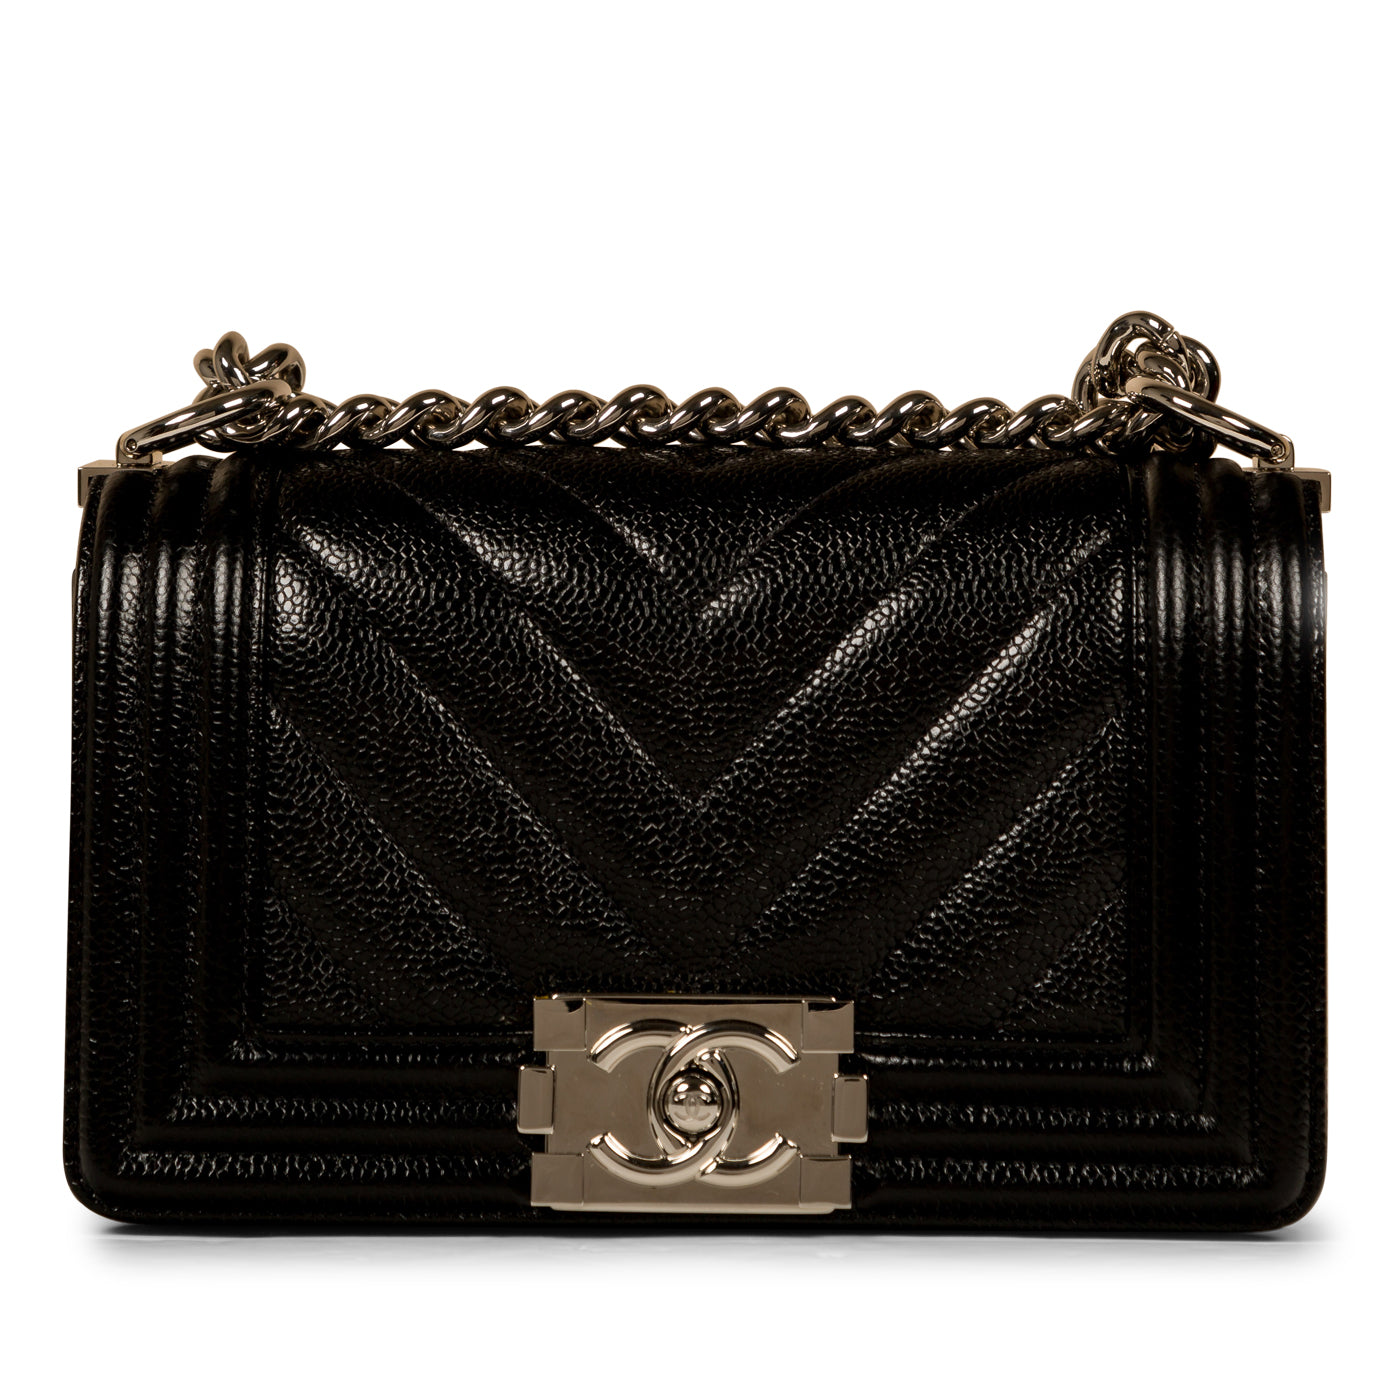 Chanel - Small Boy Bag - Black Caviar Leather - SILVER Hardware - New ...